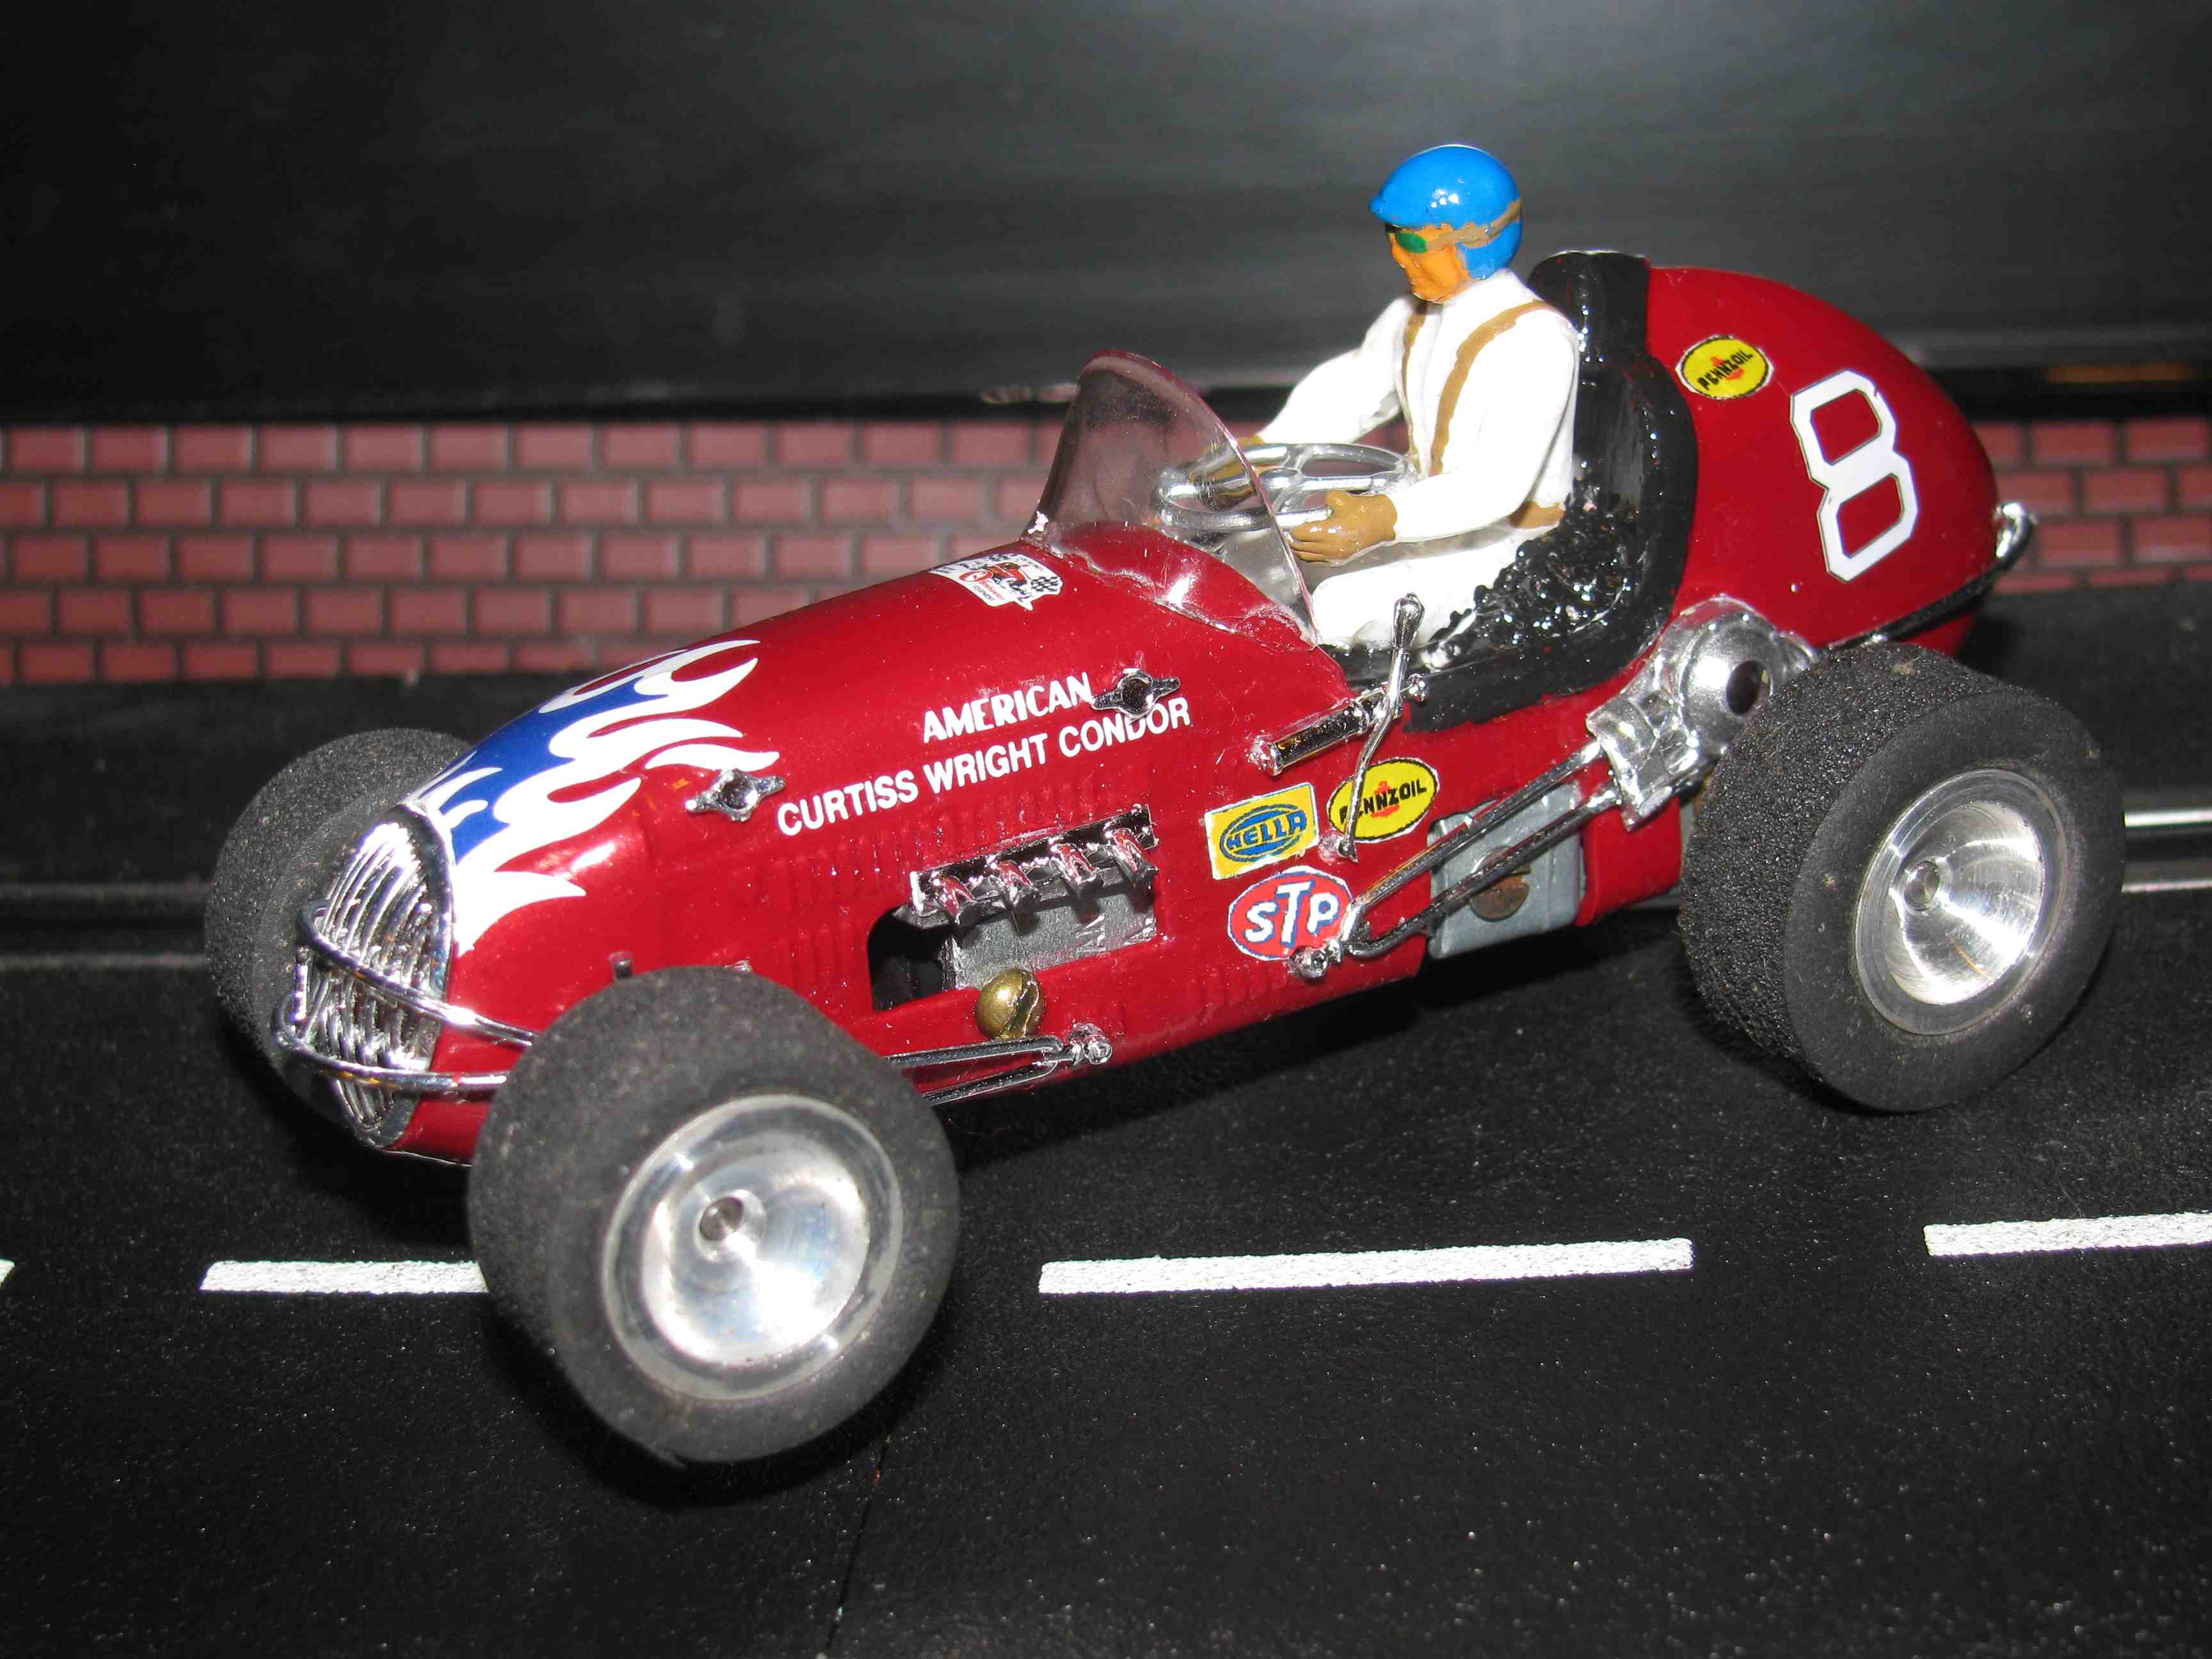 * SOLD * Vintage Revell-Monogram Midget Racer “American CWC” Metallic Red Slot Car 1/32 Scale Car #8